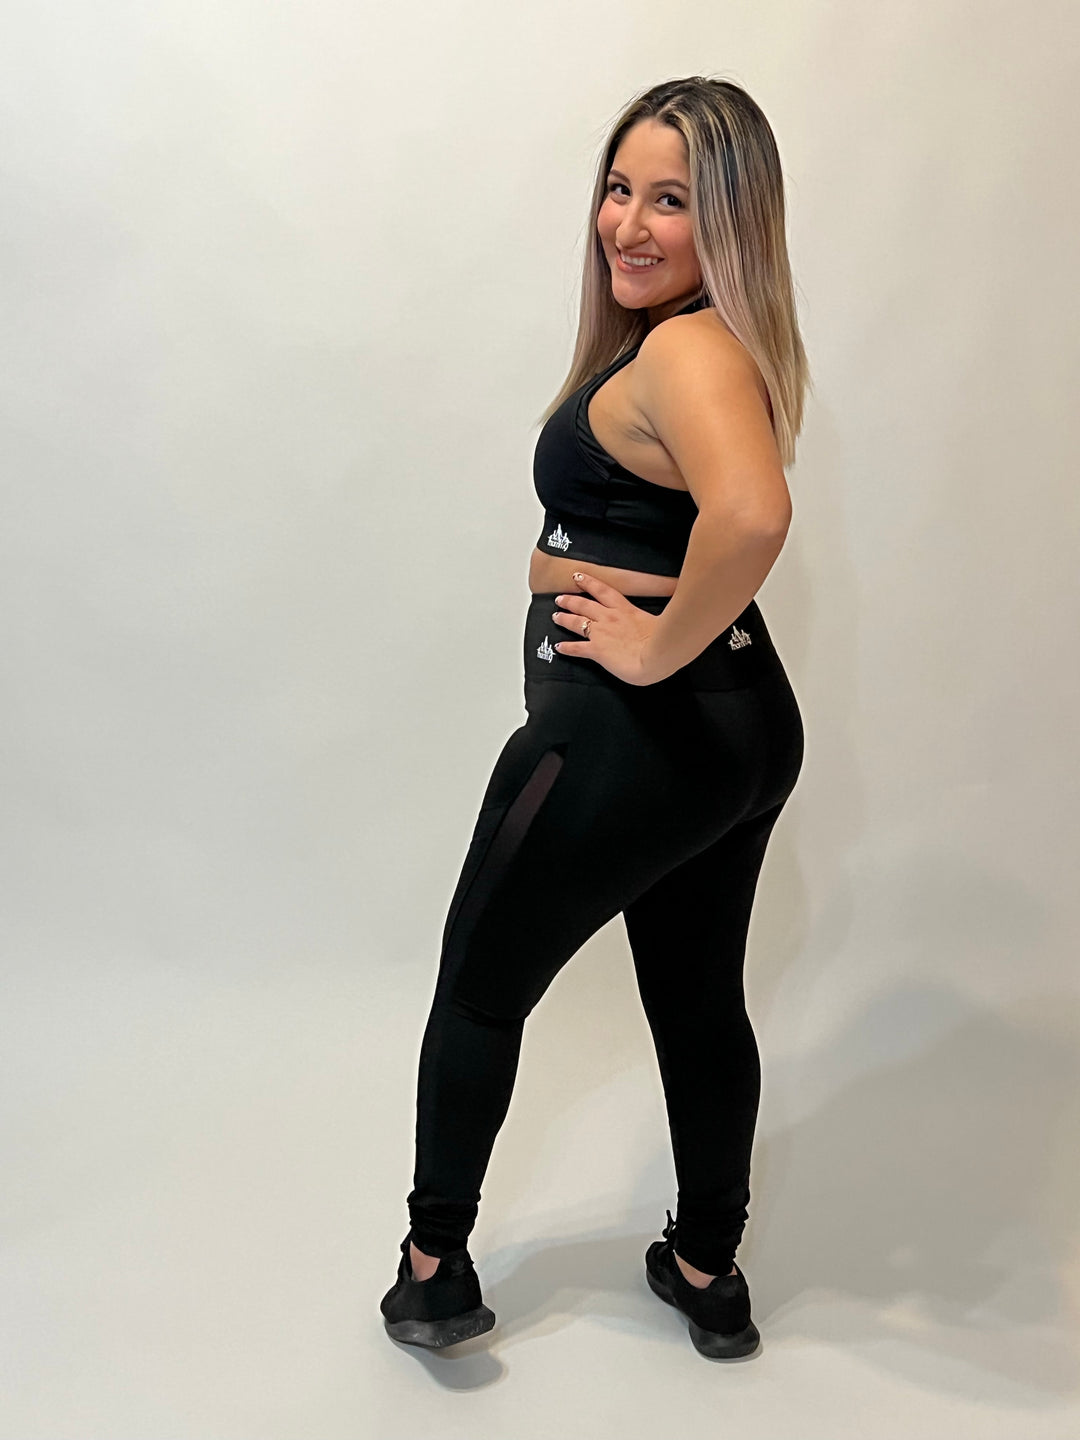 Ladies plain black leggings with mesh panels with logo - E.L. Fitness